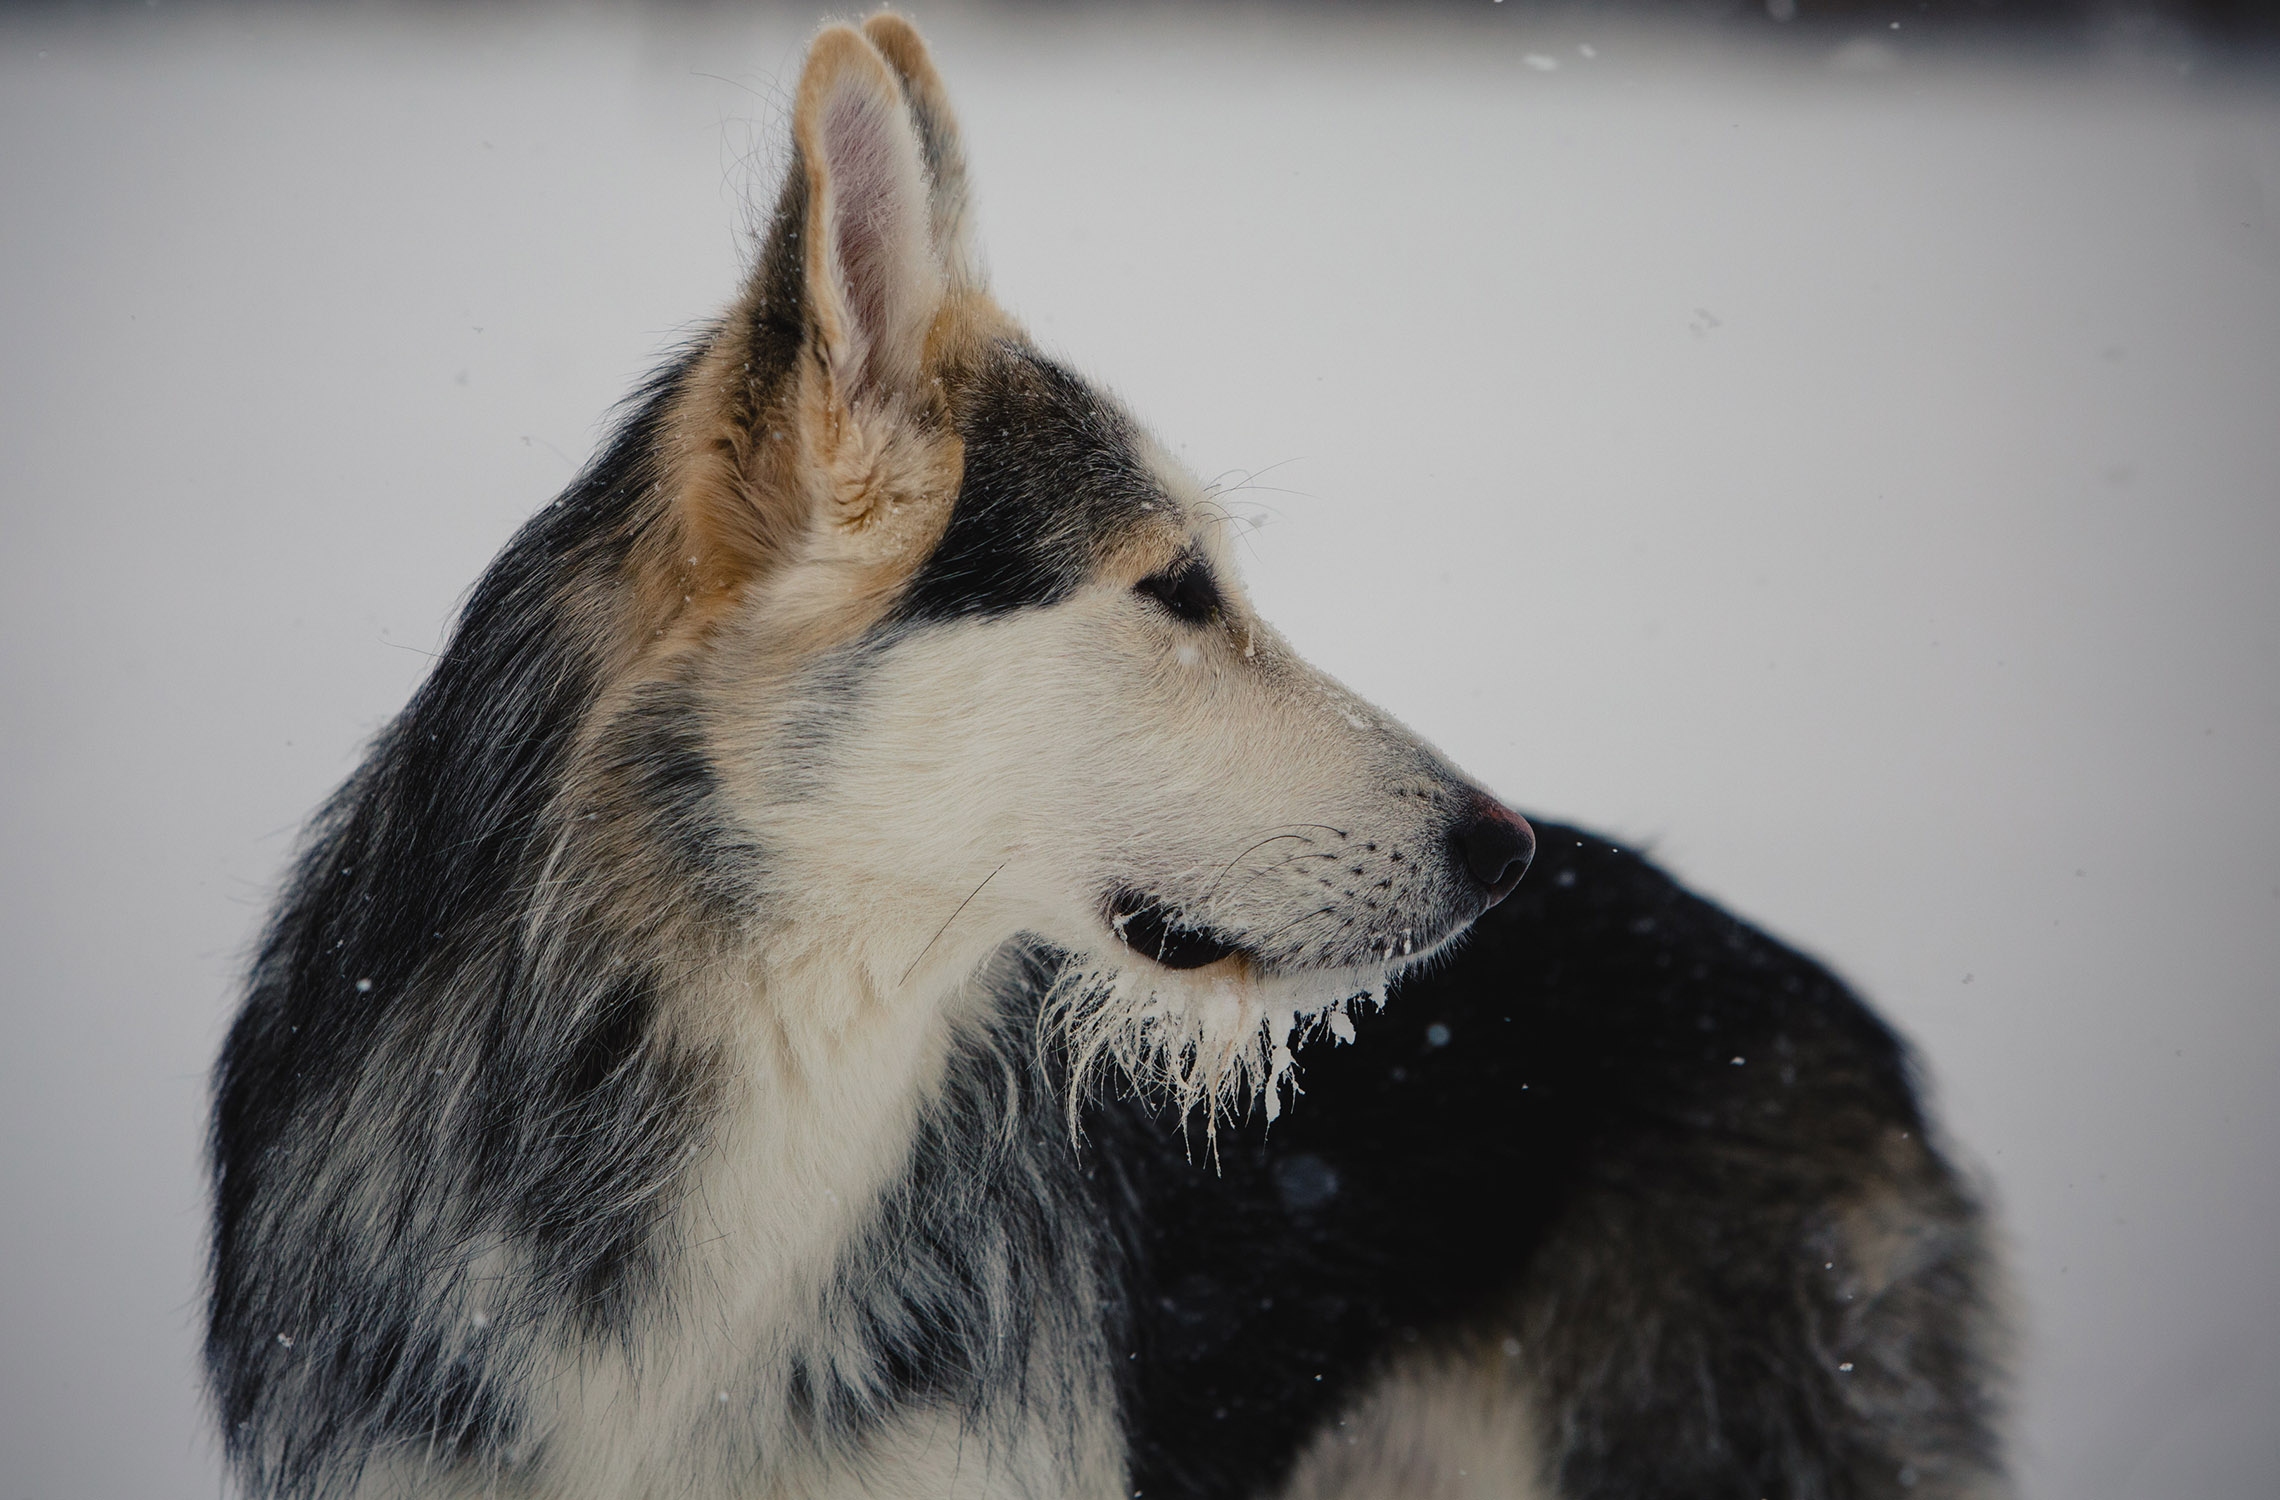 Husky, shepherd, irish wolfhound mix in the snow. 